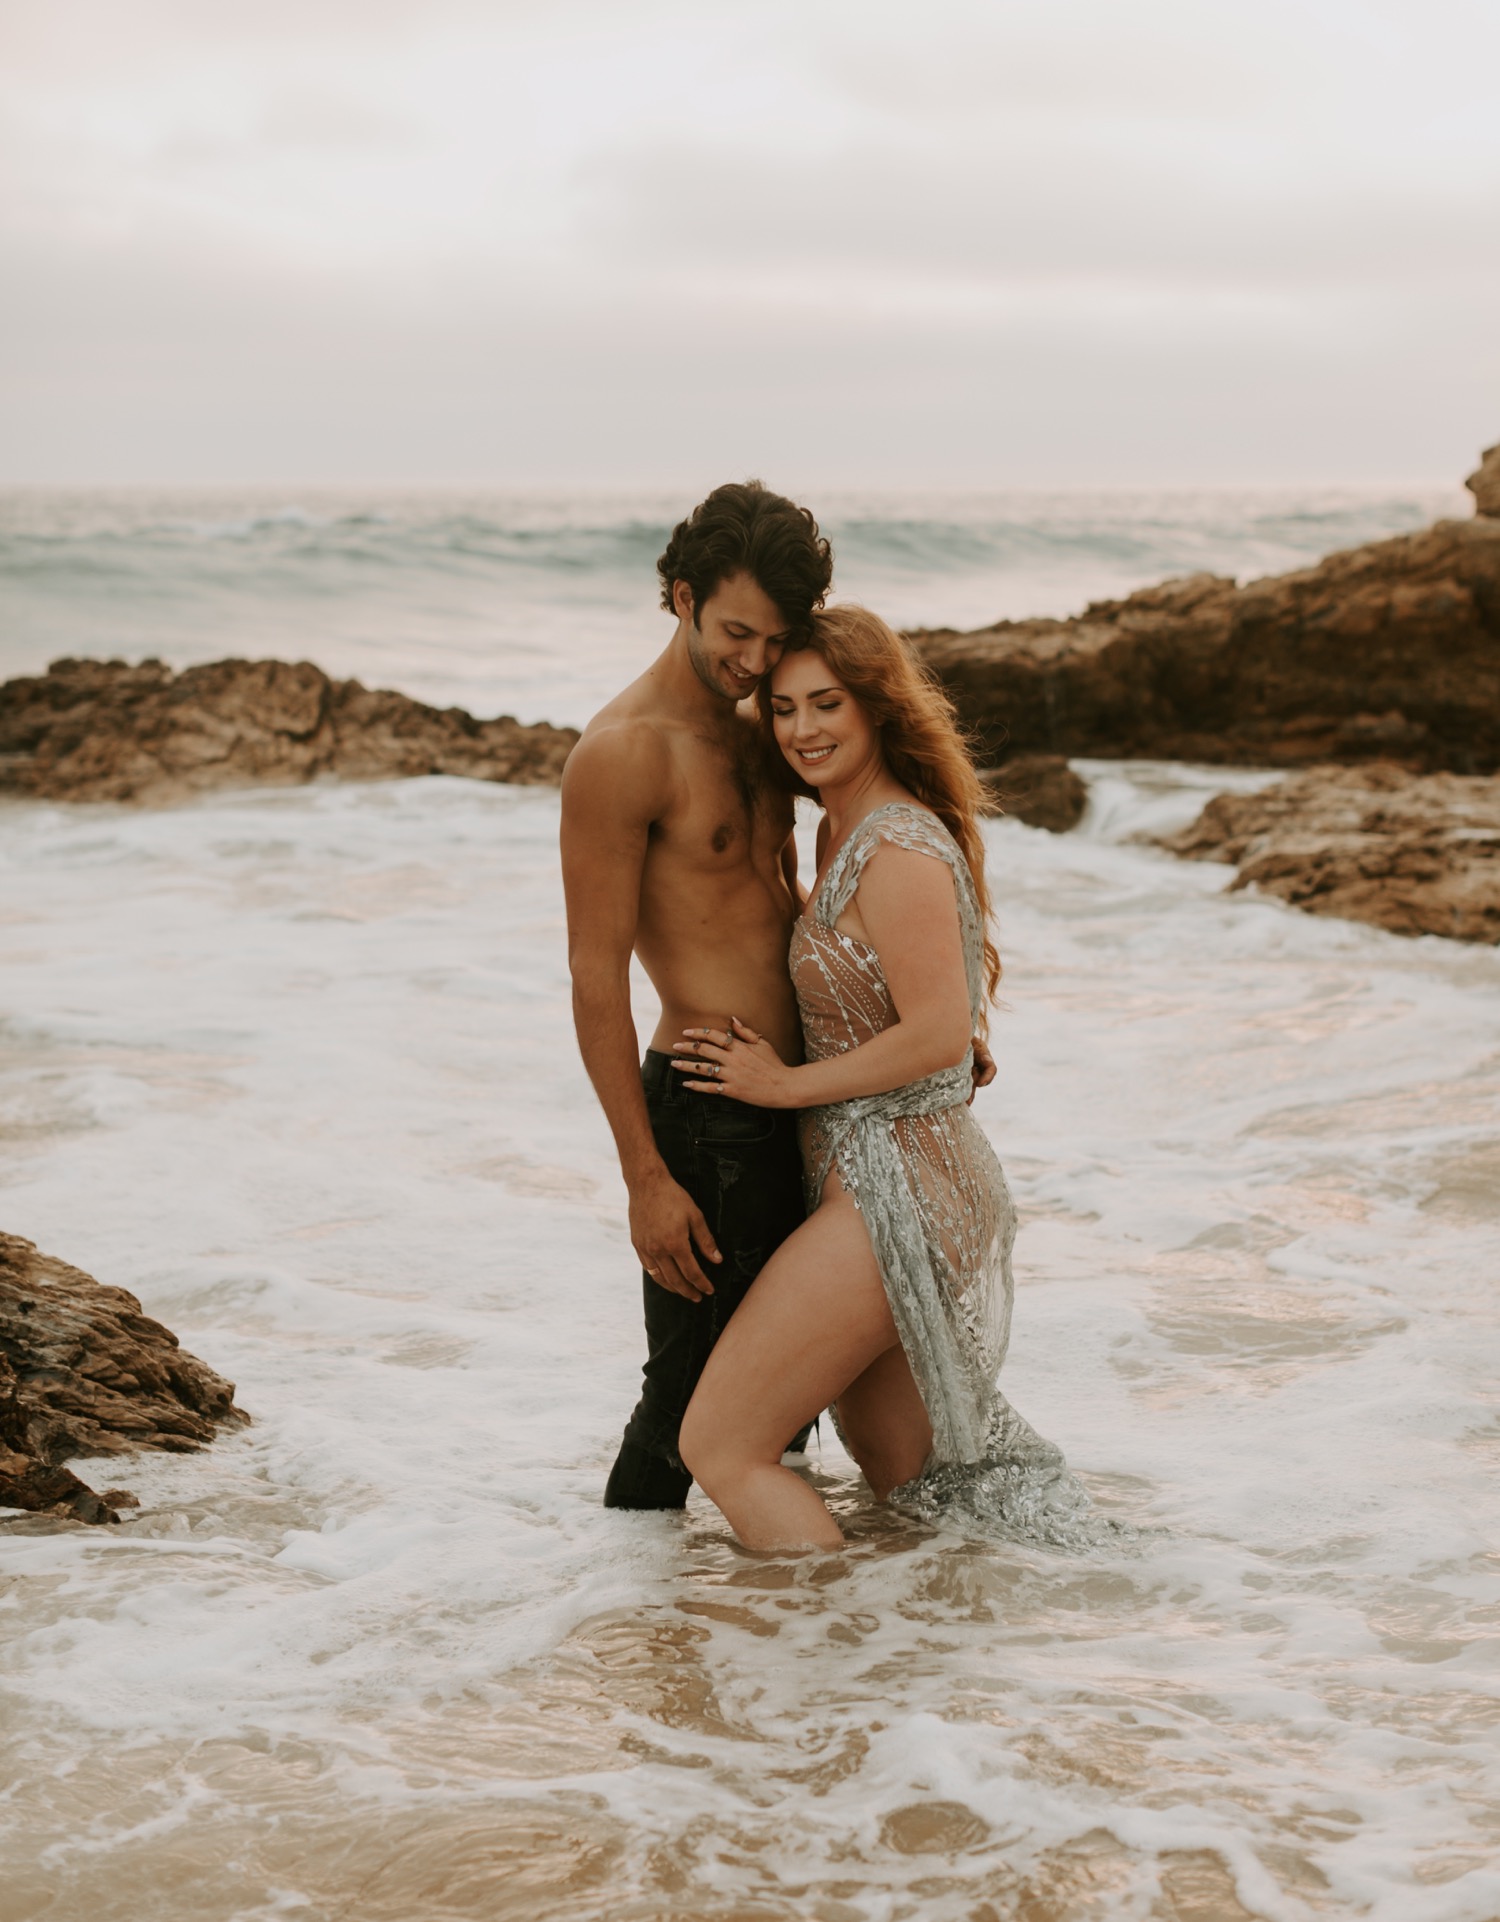 Posing Beautiful Couple On Sea Beach Stock Photo 35609911 | Shutterstock